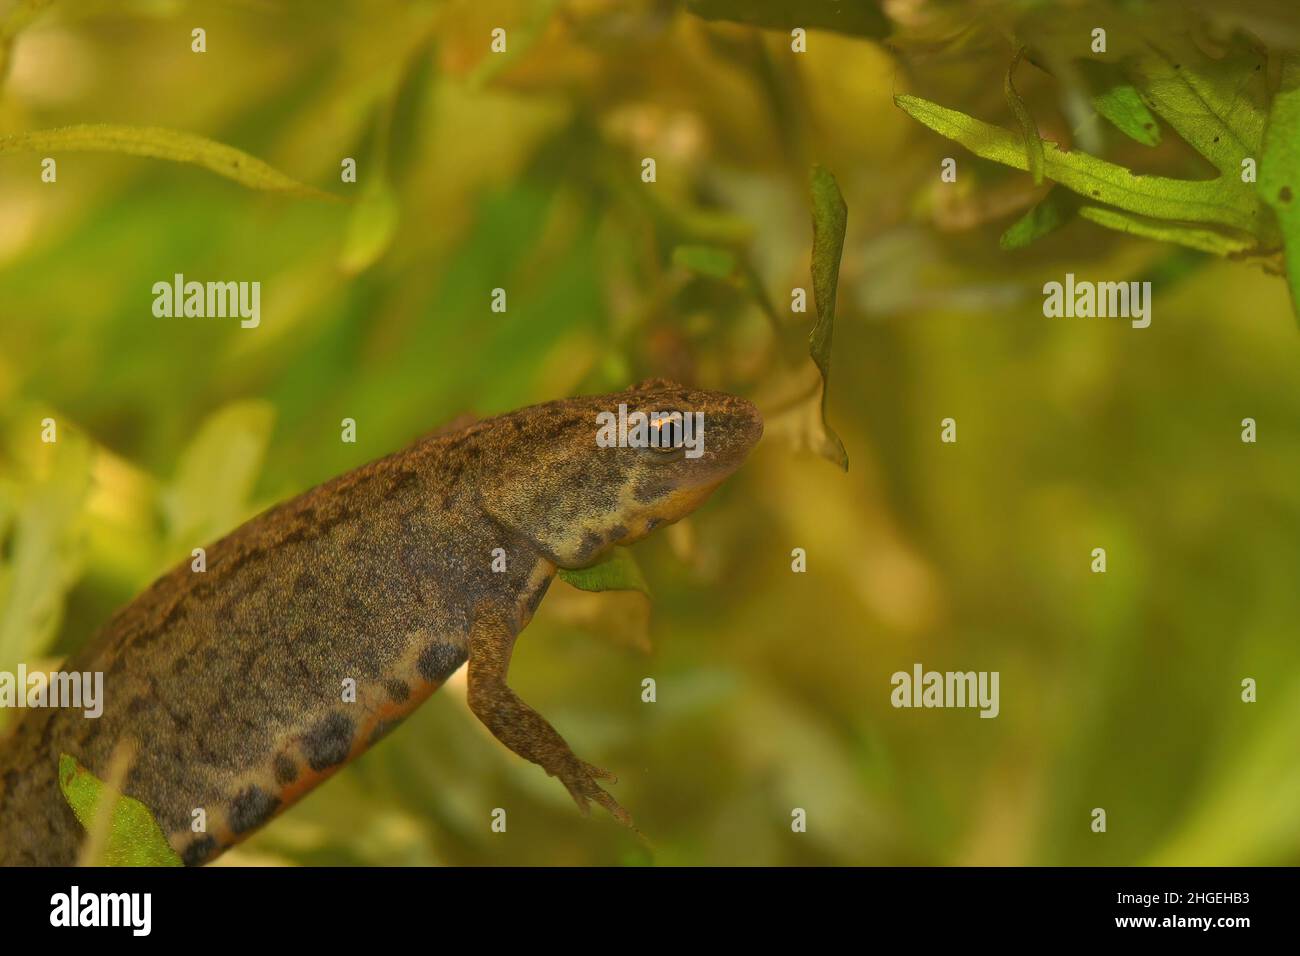 Closeup on a Portugyese Bosca's newt, Lissotriton boscai hiding among the green waterweeds Stock Photo